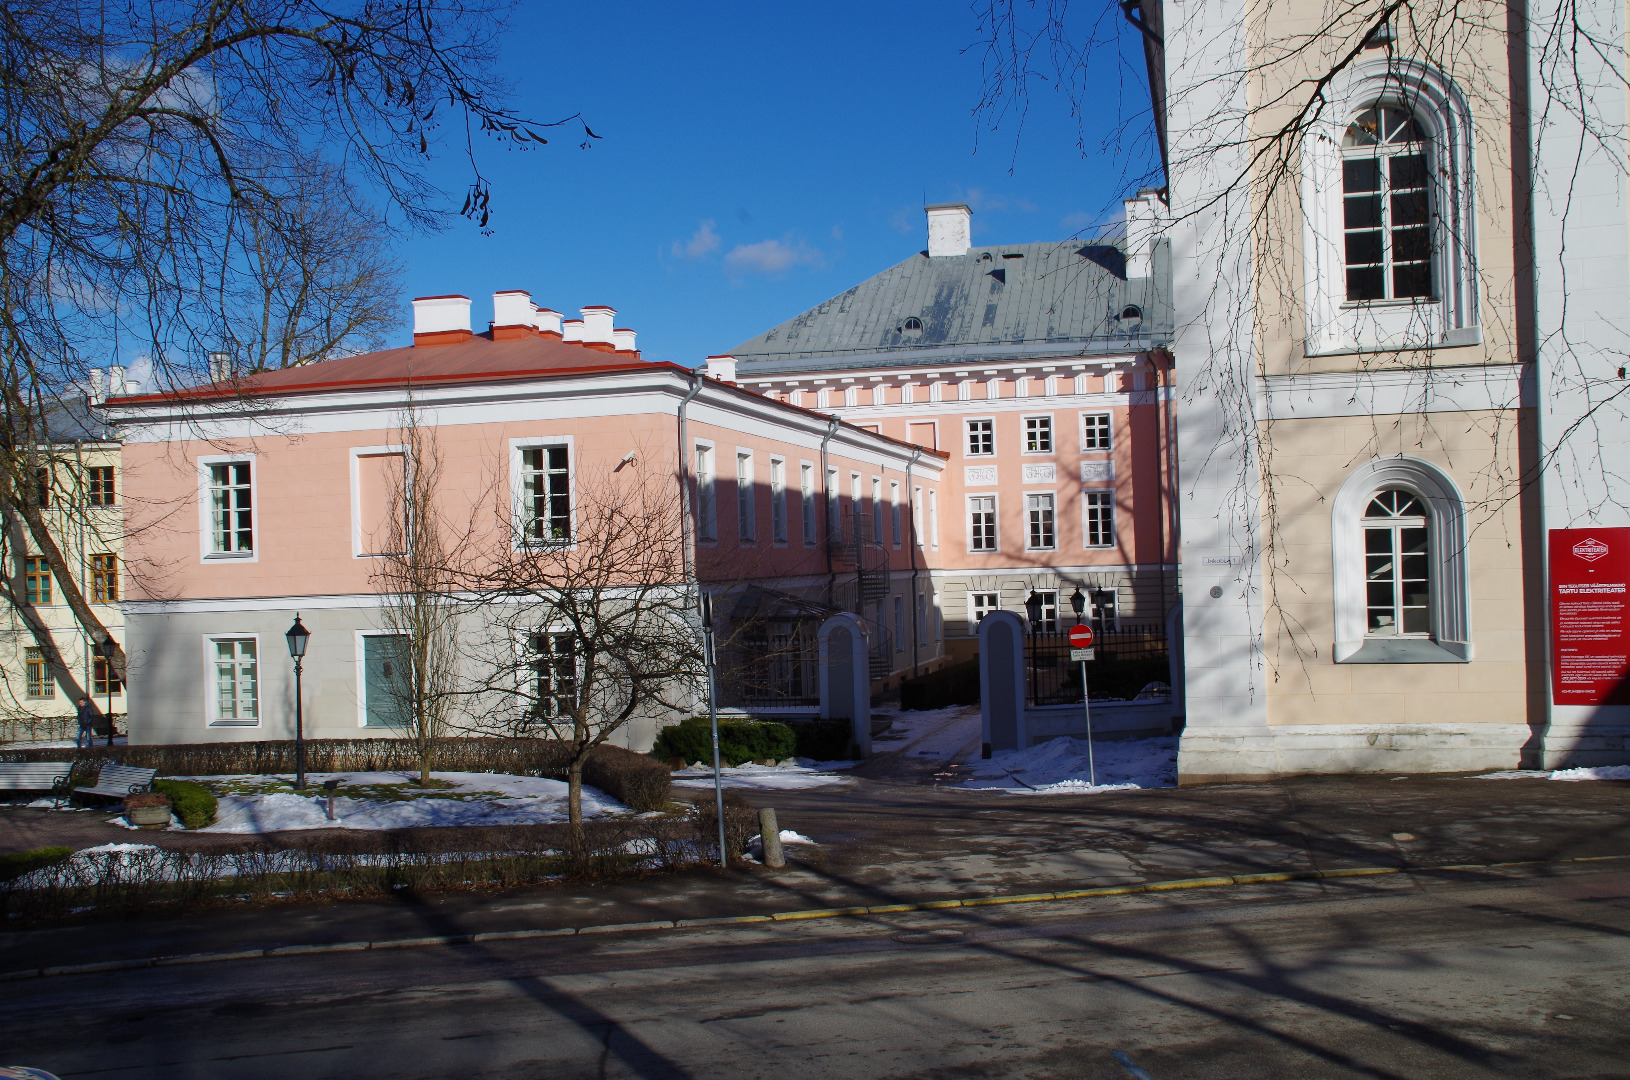 Main building of the University of Tartu, 1802-1809.a. rephoto